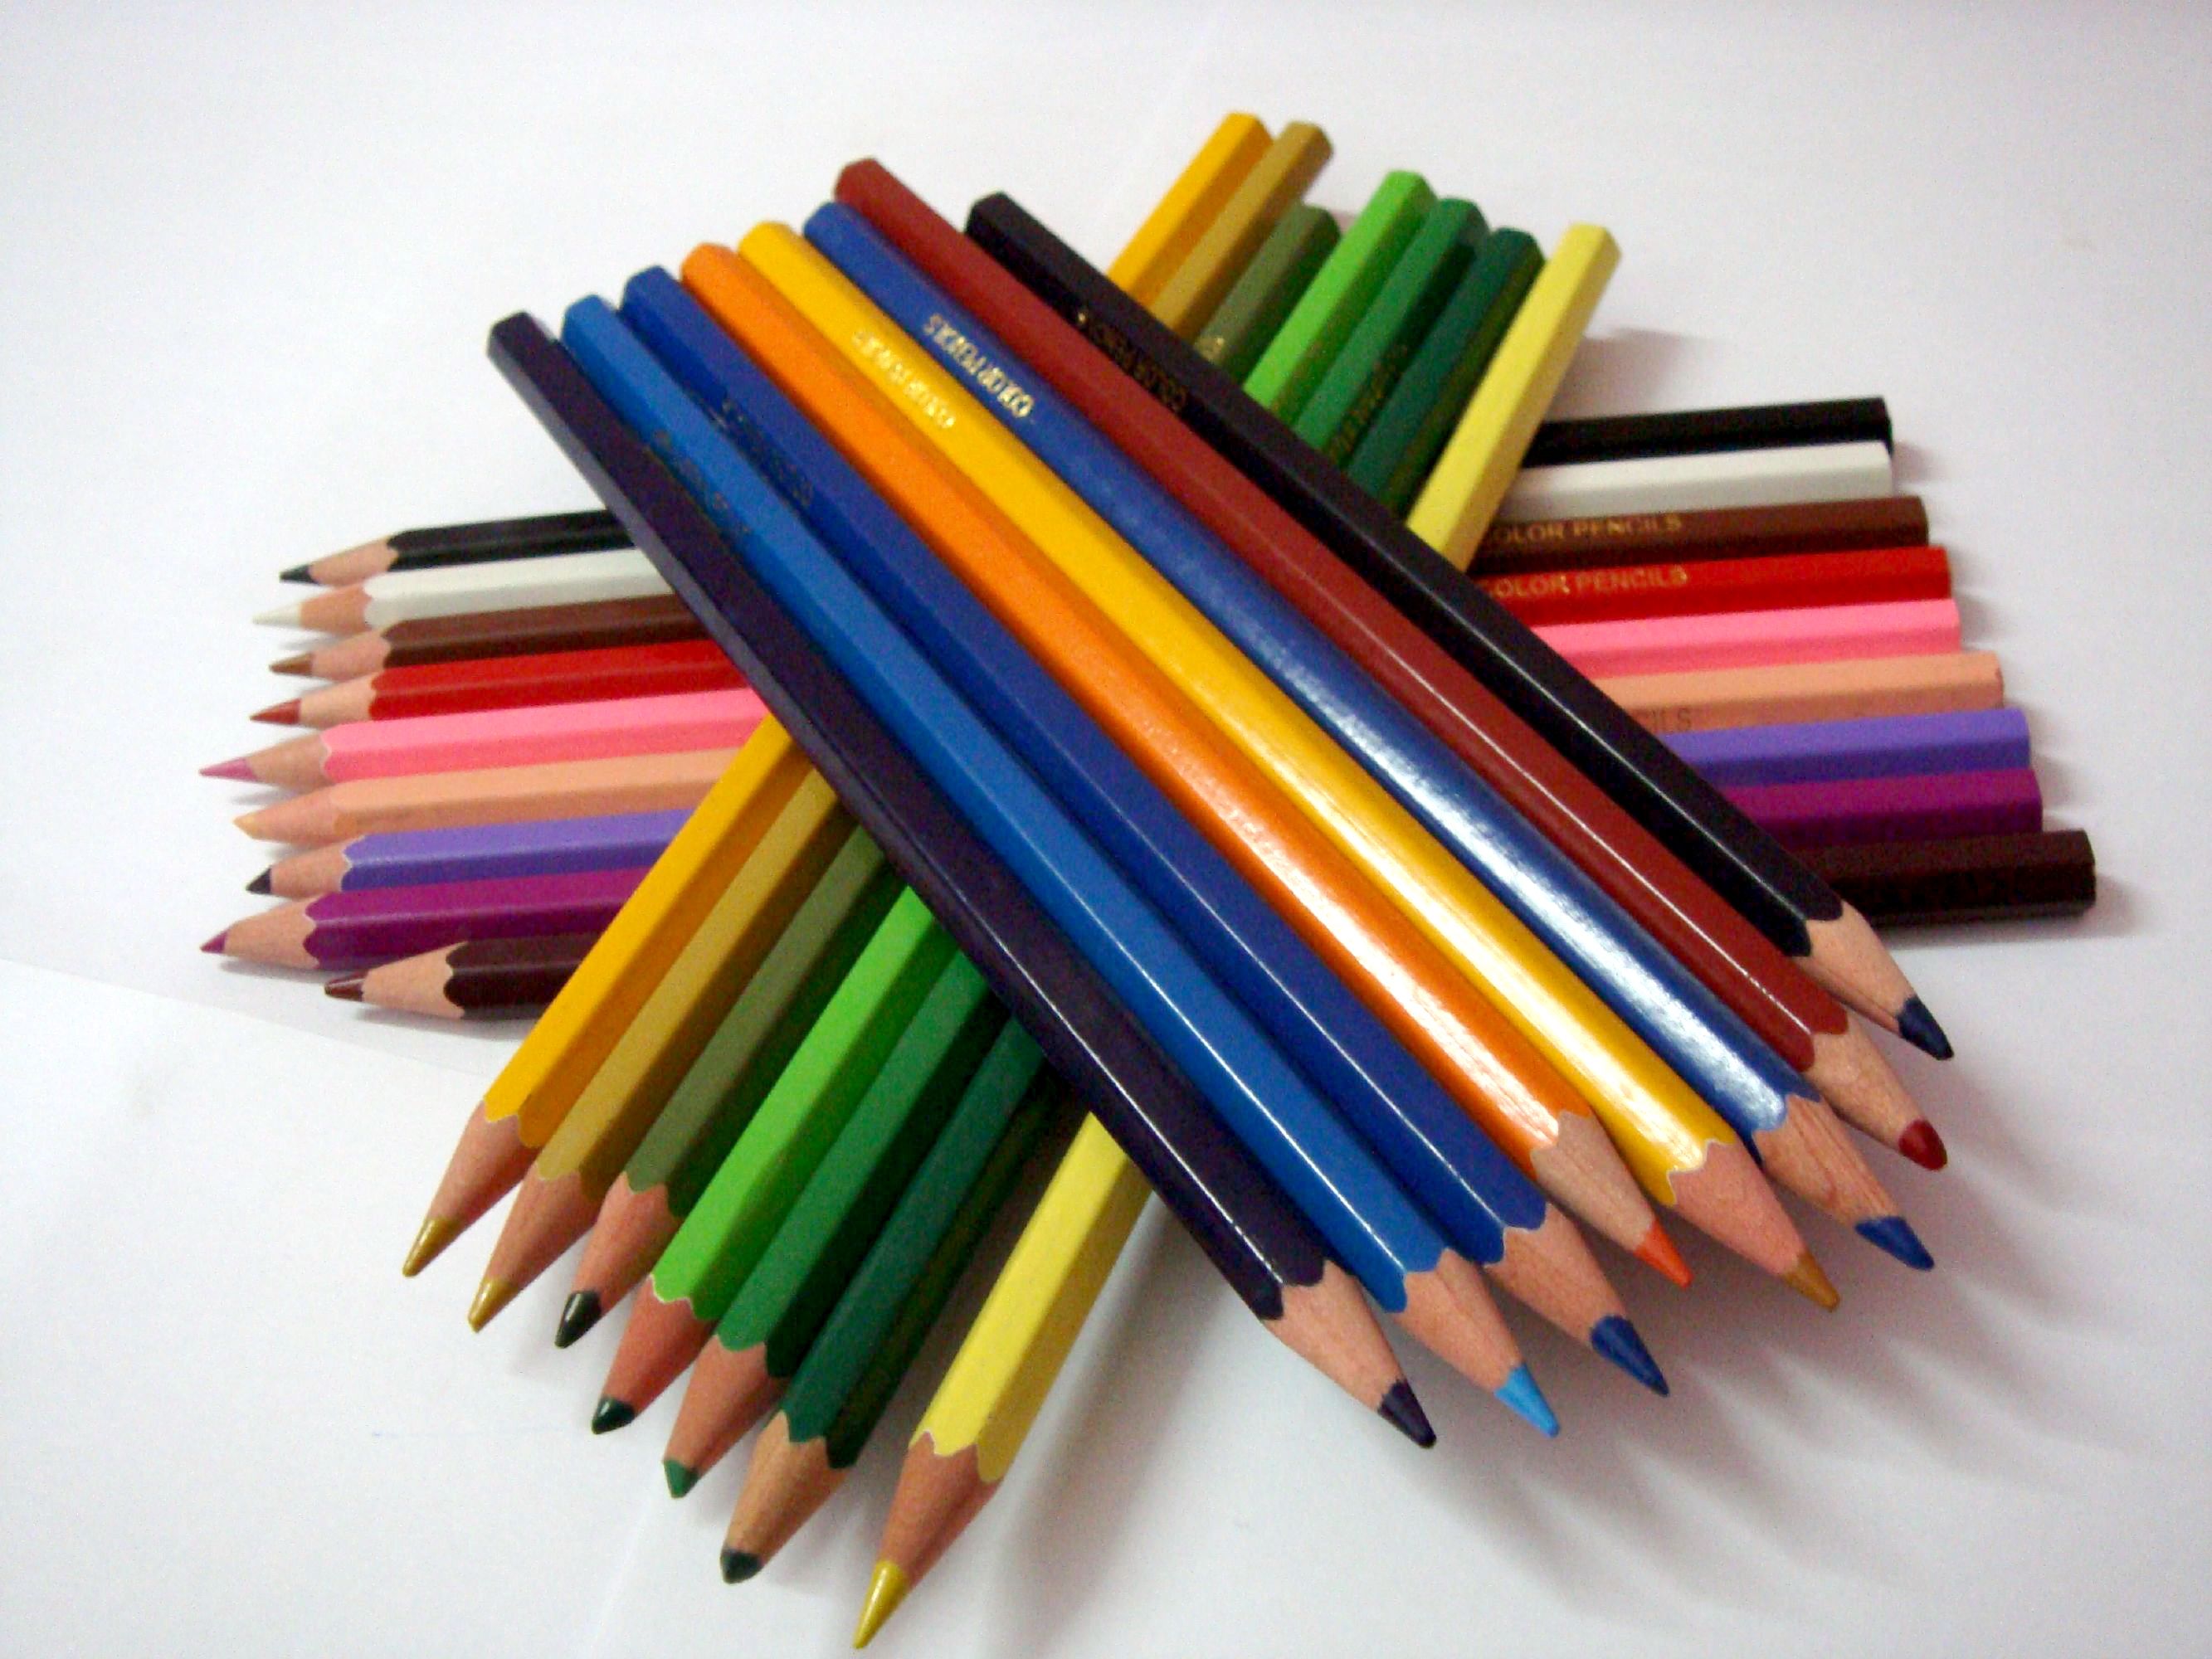 Pen pencil book. OBOS карандаши. Colour Pencils. Pencils, Pens Coloring. One Color Pencil.